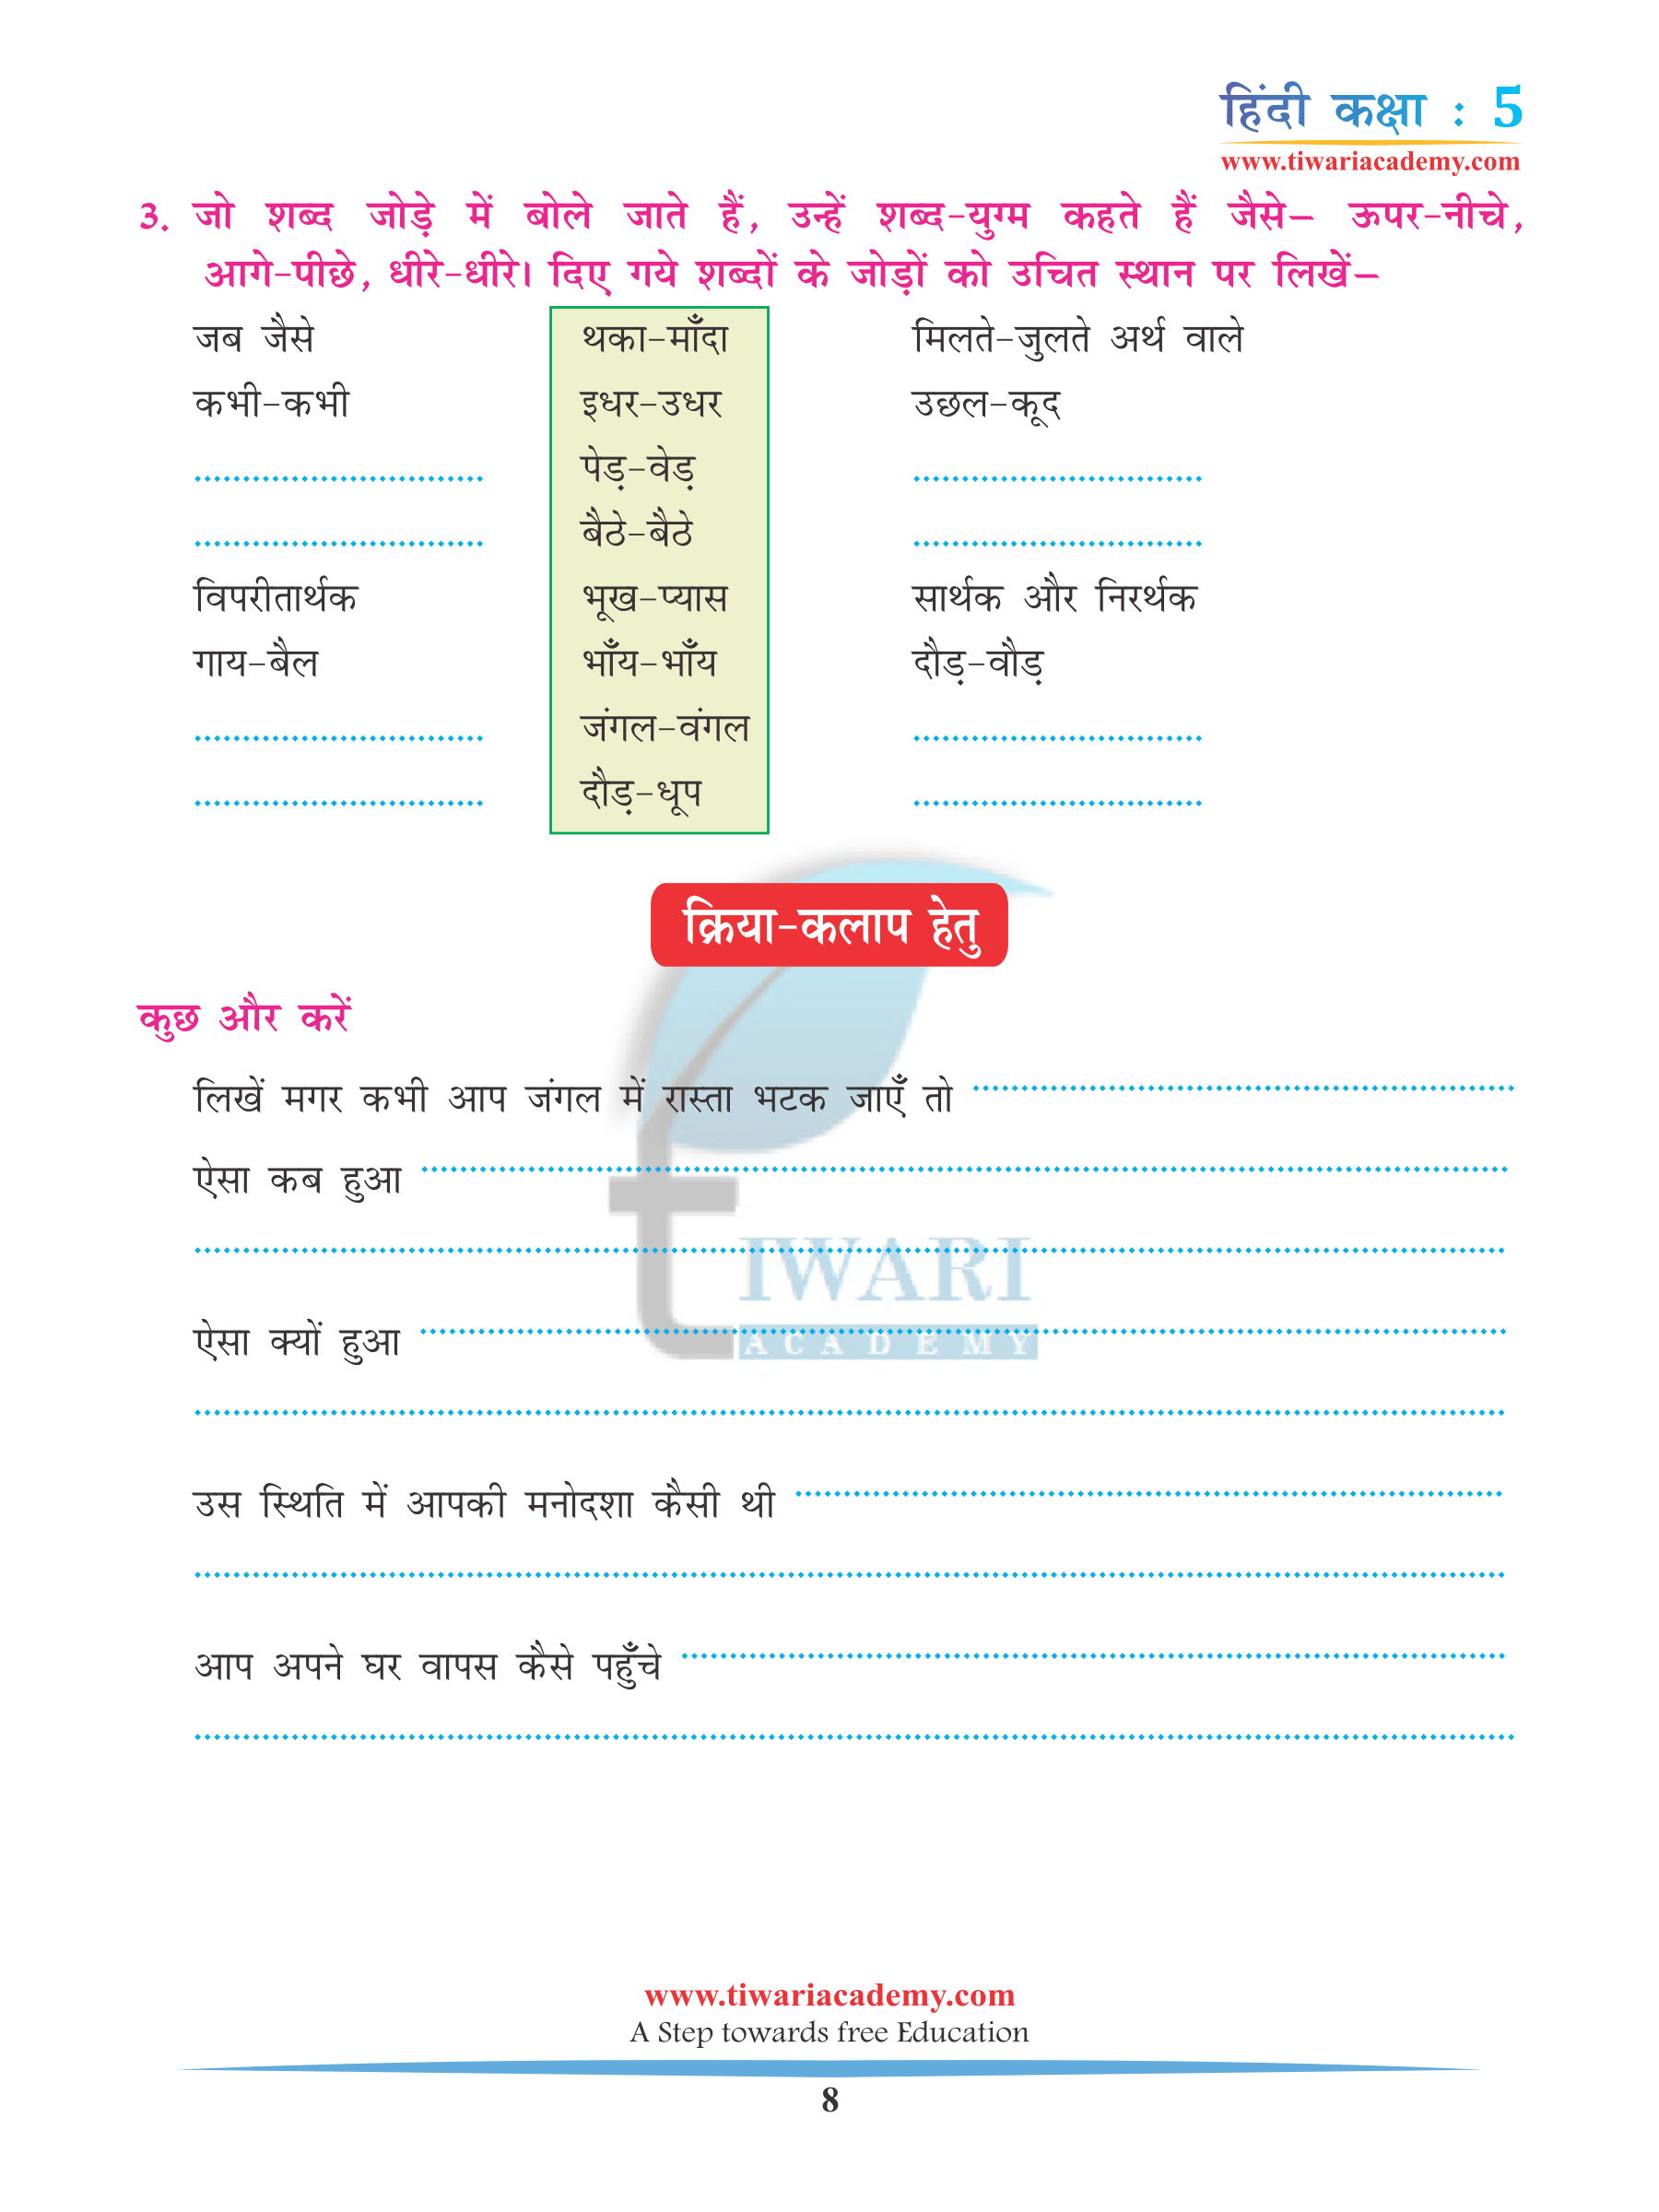 CBSE NCERT Class 5 Hindi Chapter 2 Solutions